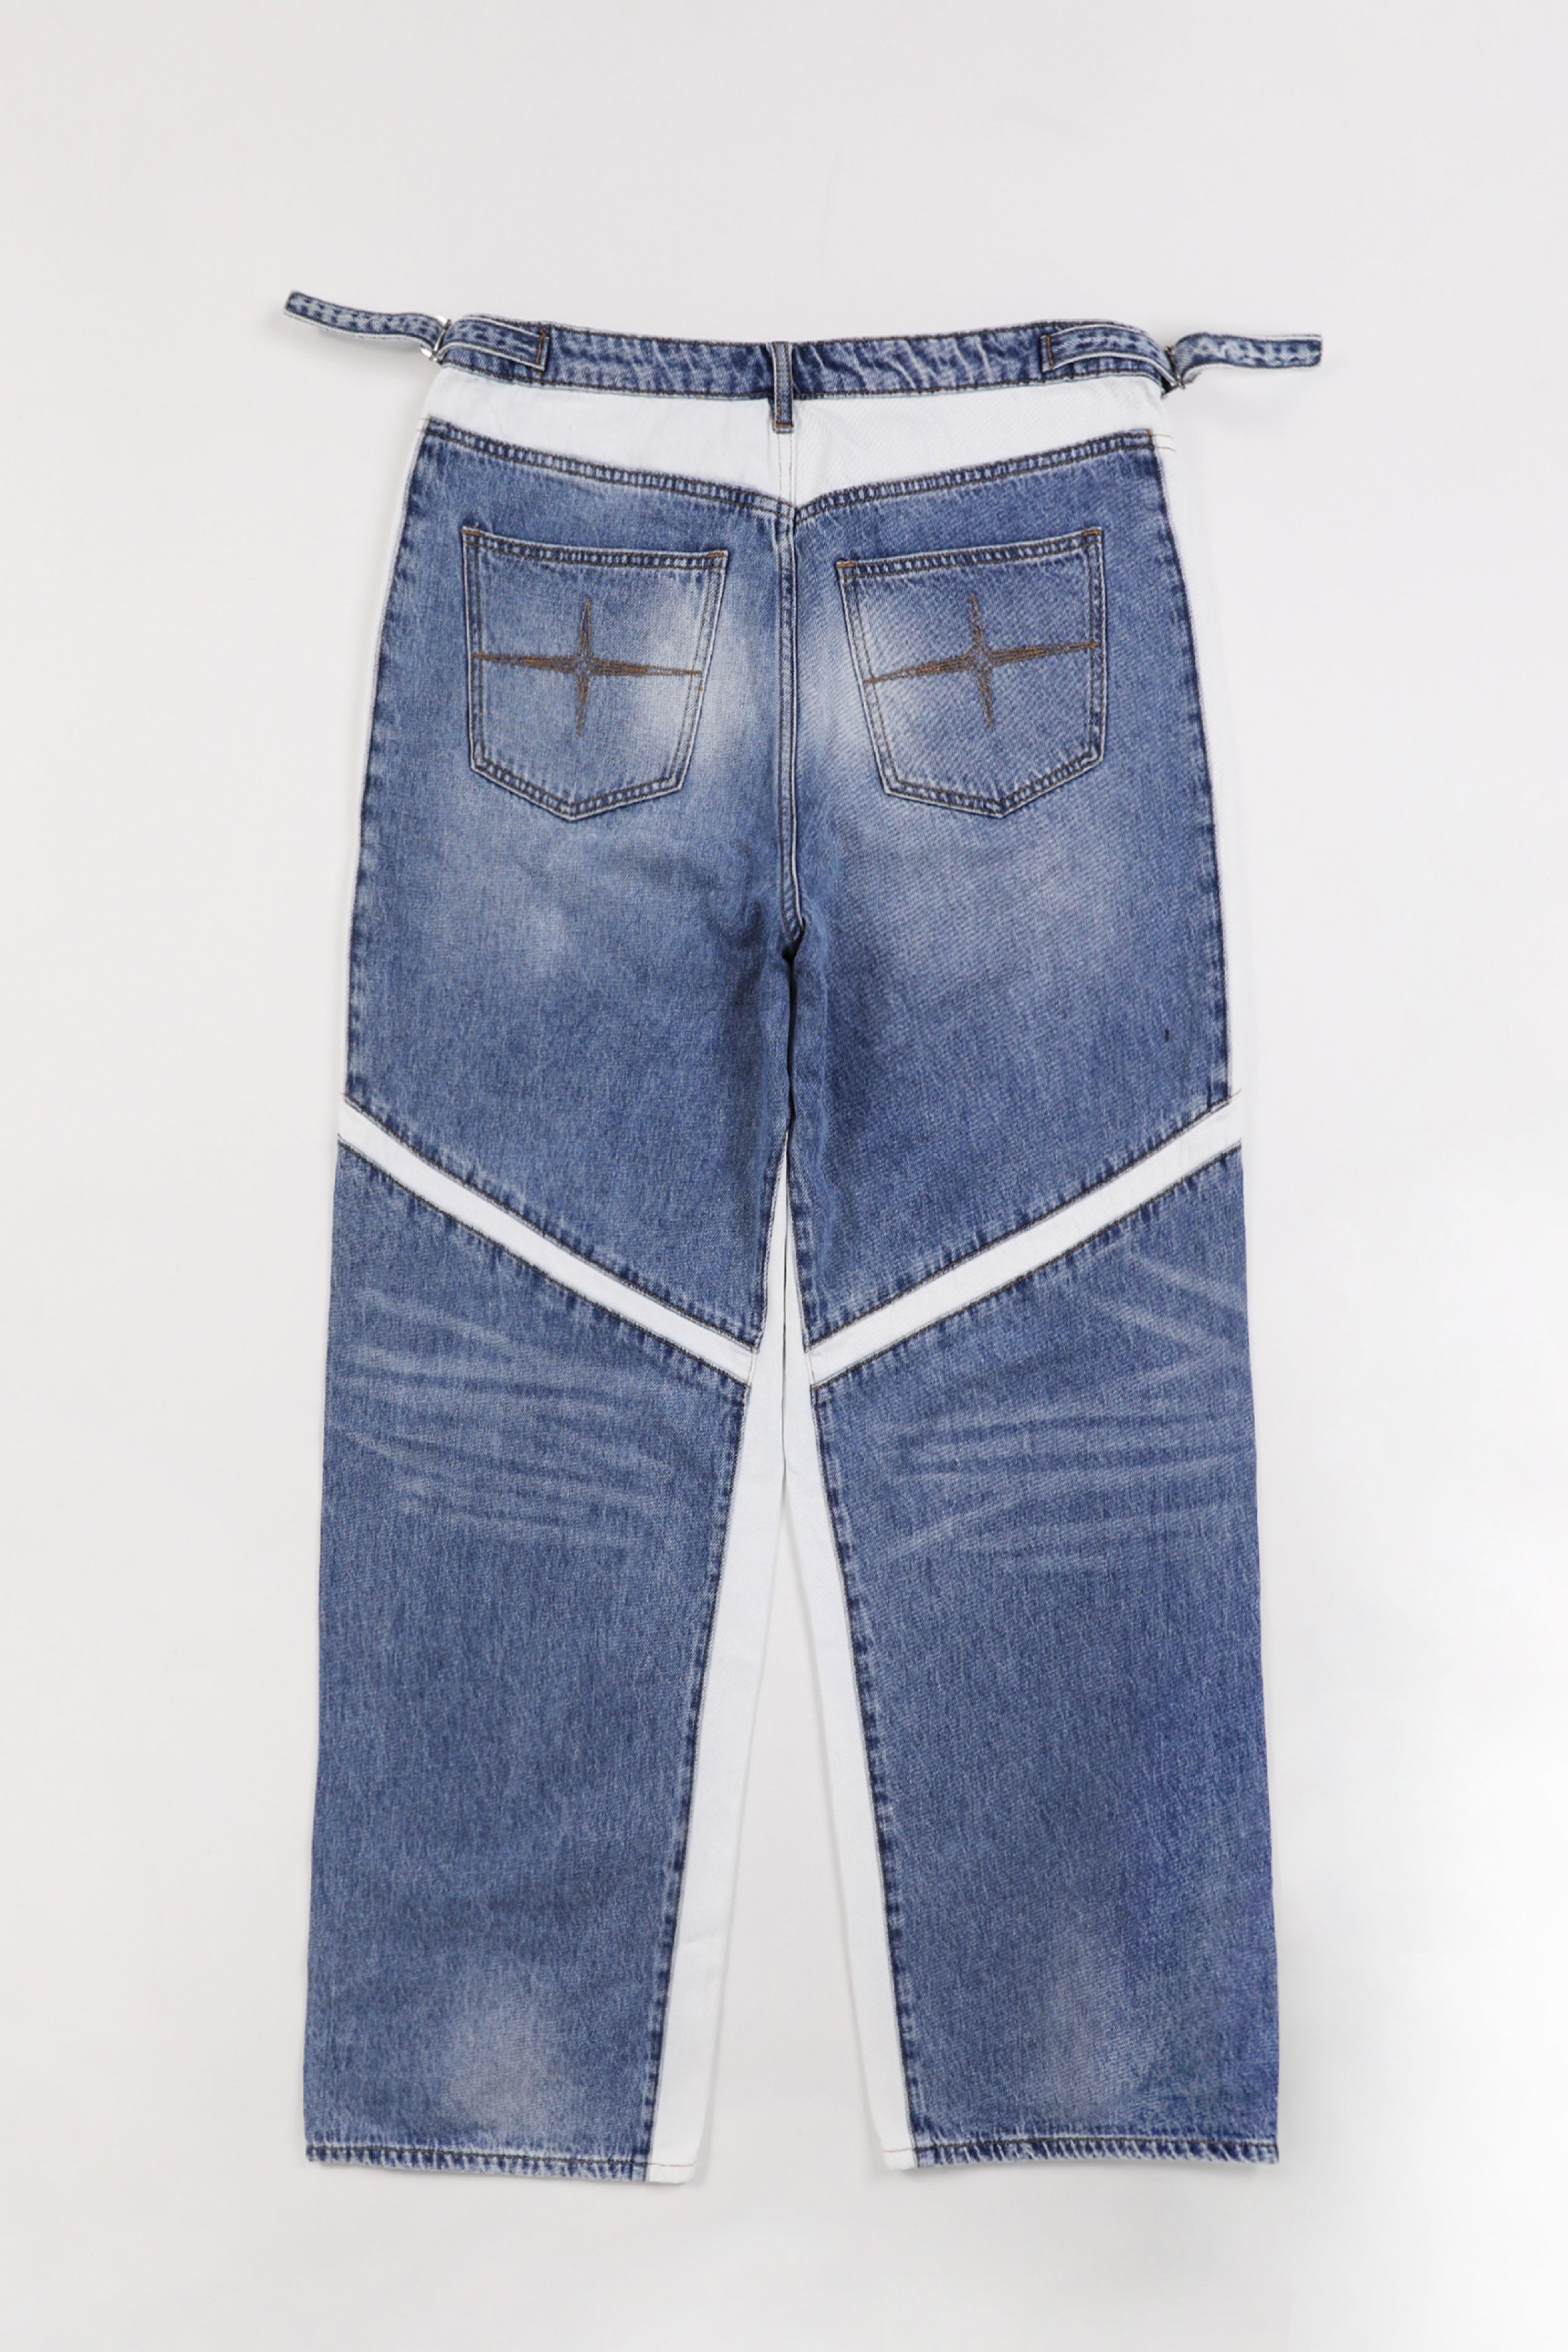 Badblood Line Panel Denim Pants Large Fit Blue/White